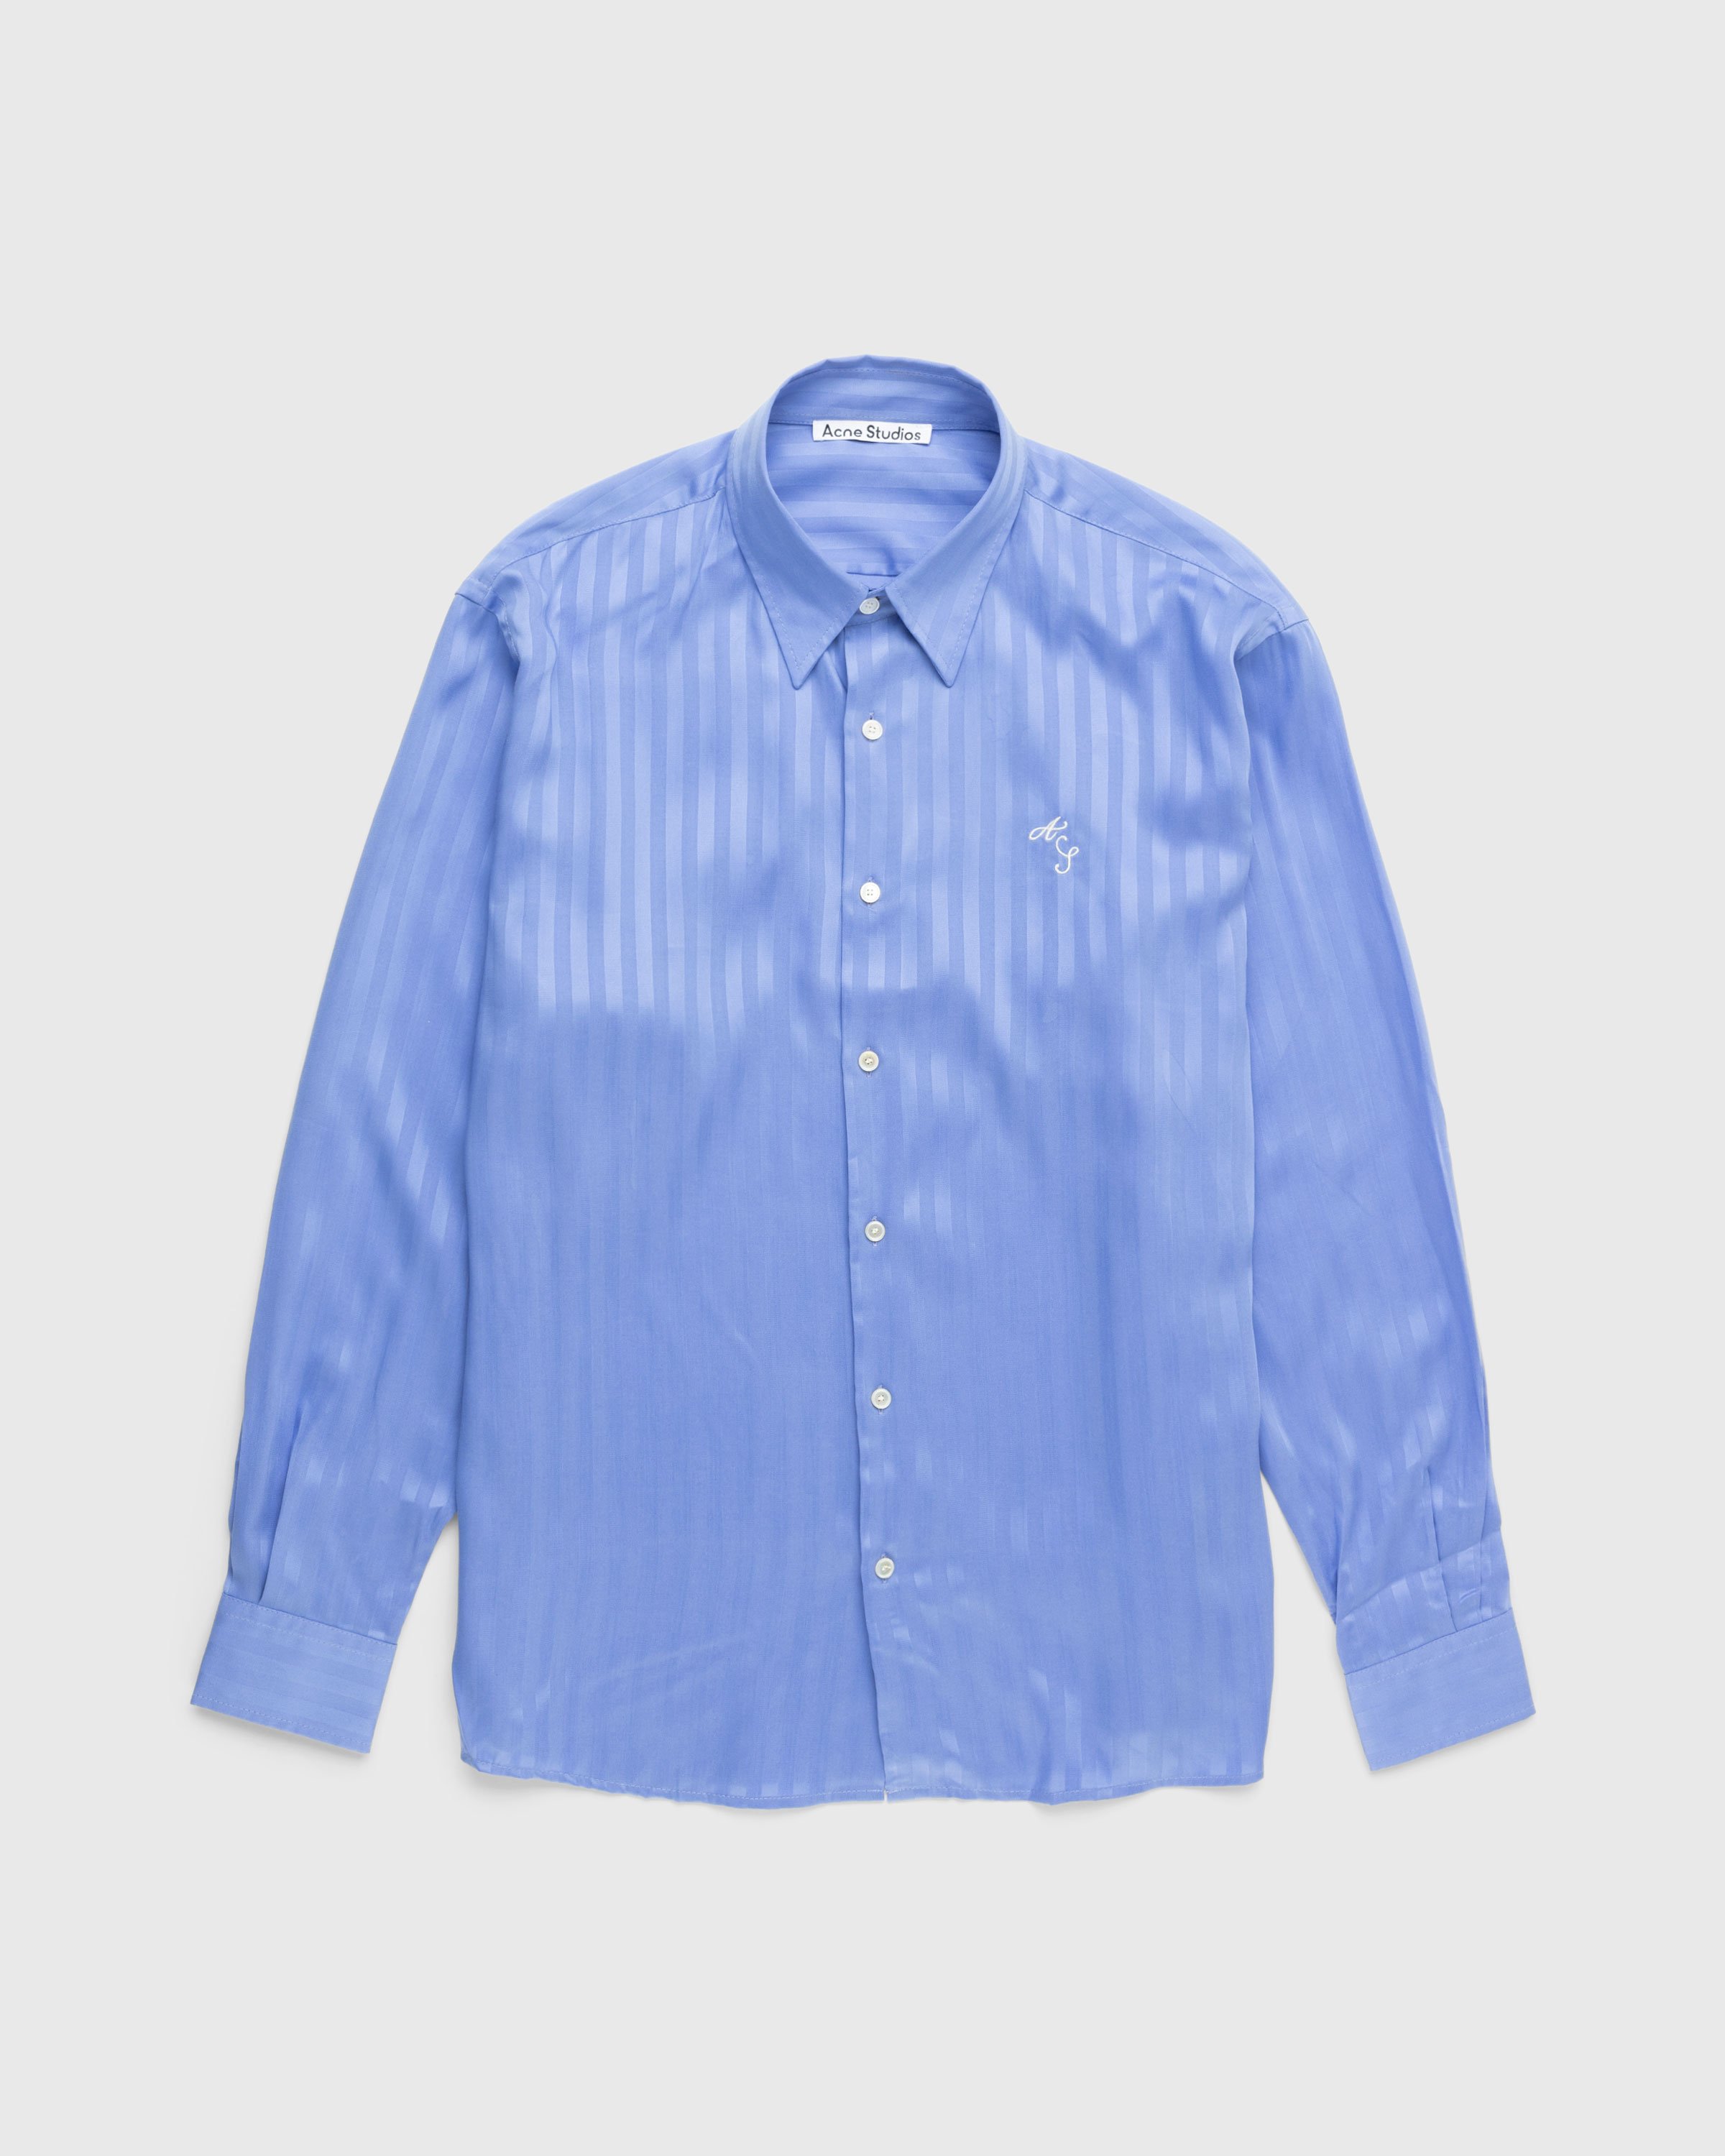 Acne Studios - Stripe Button-Up Shirt Blue - Clothing - Blue - Image 1